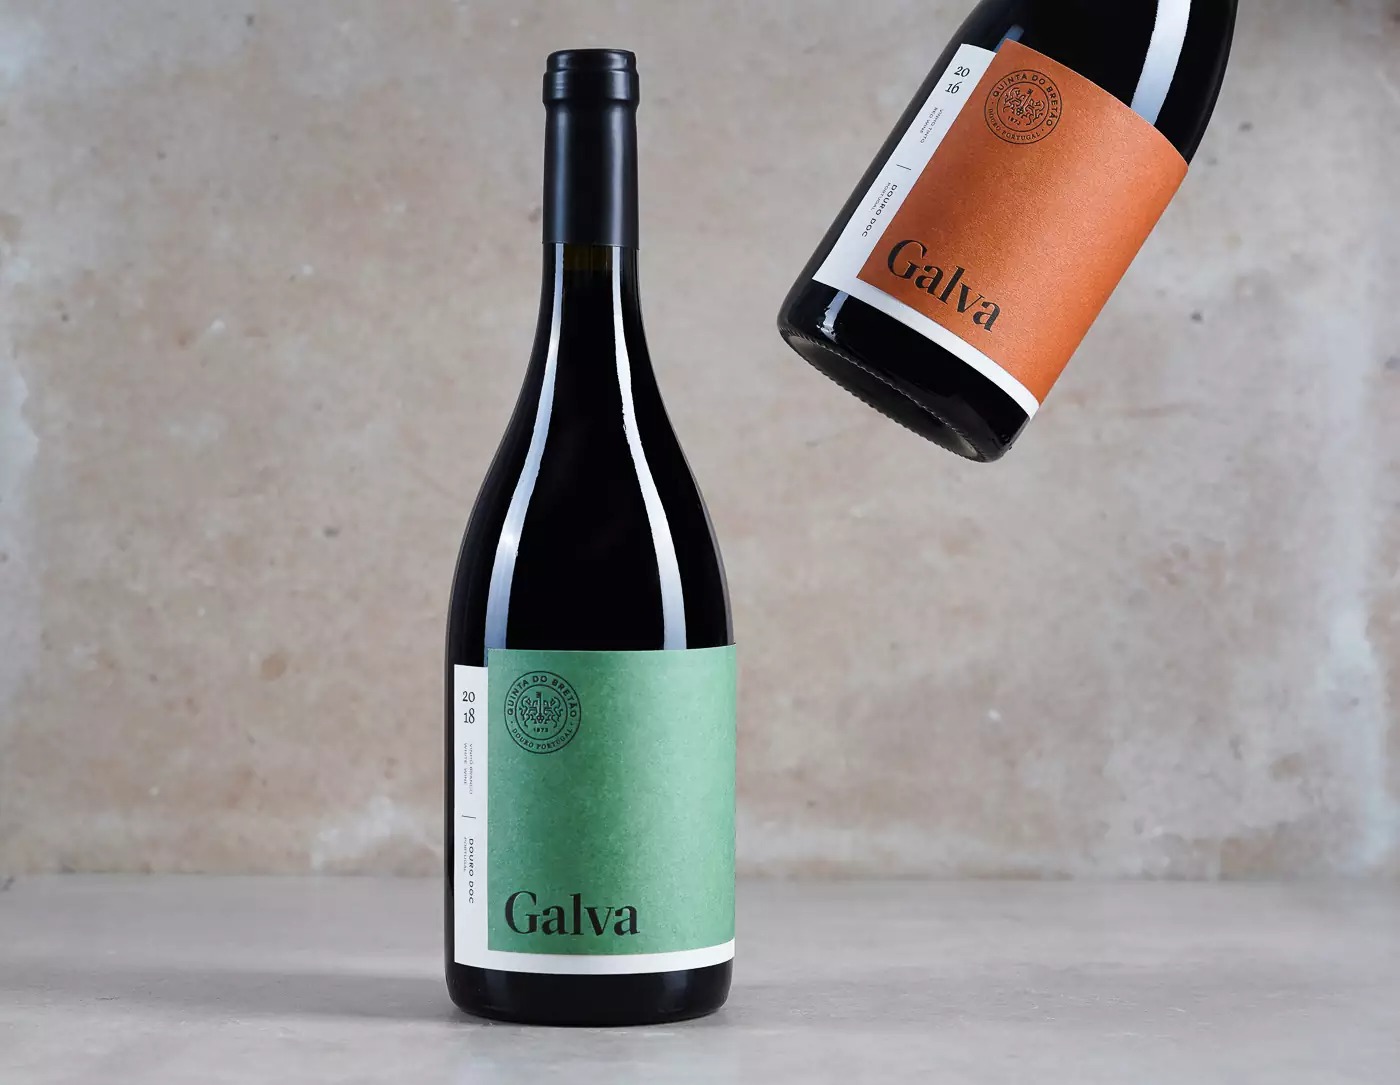 Galva葡萄酒品牌产品包装设计，葡萄酒创意包装作品欣赏。